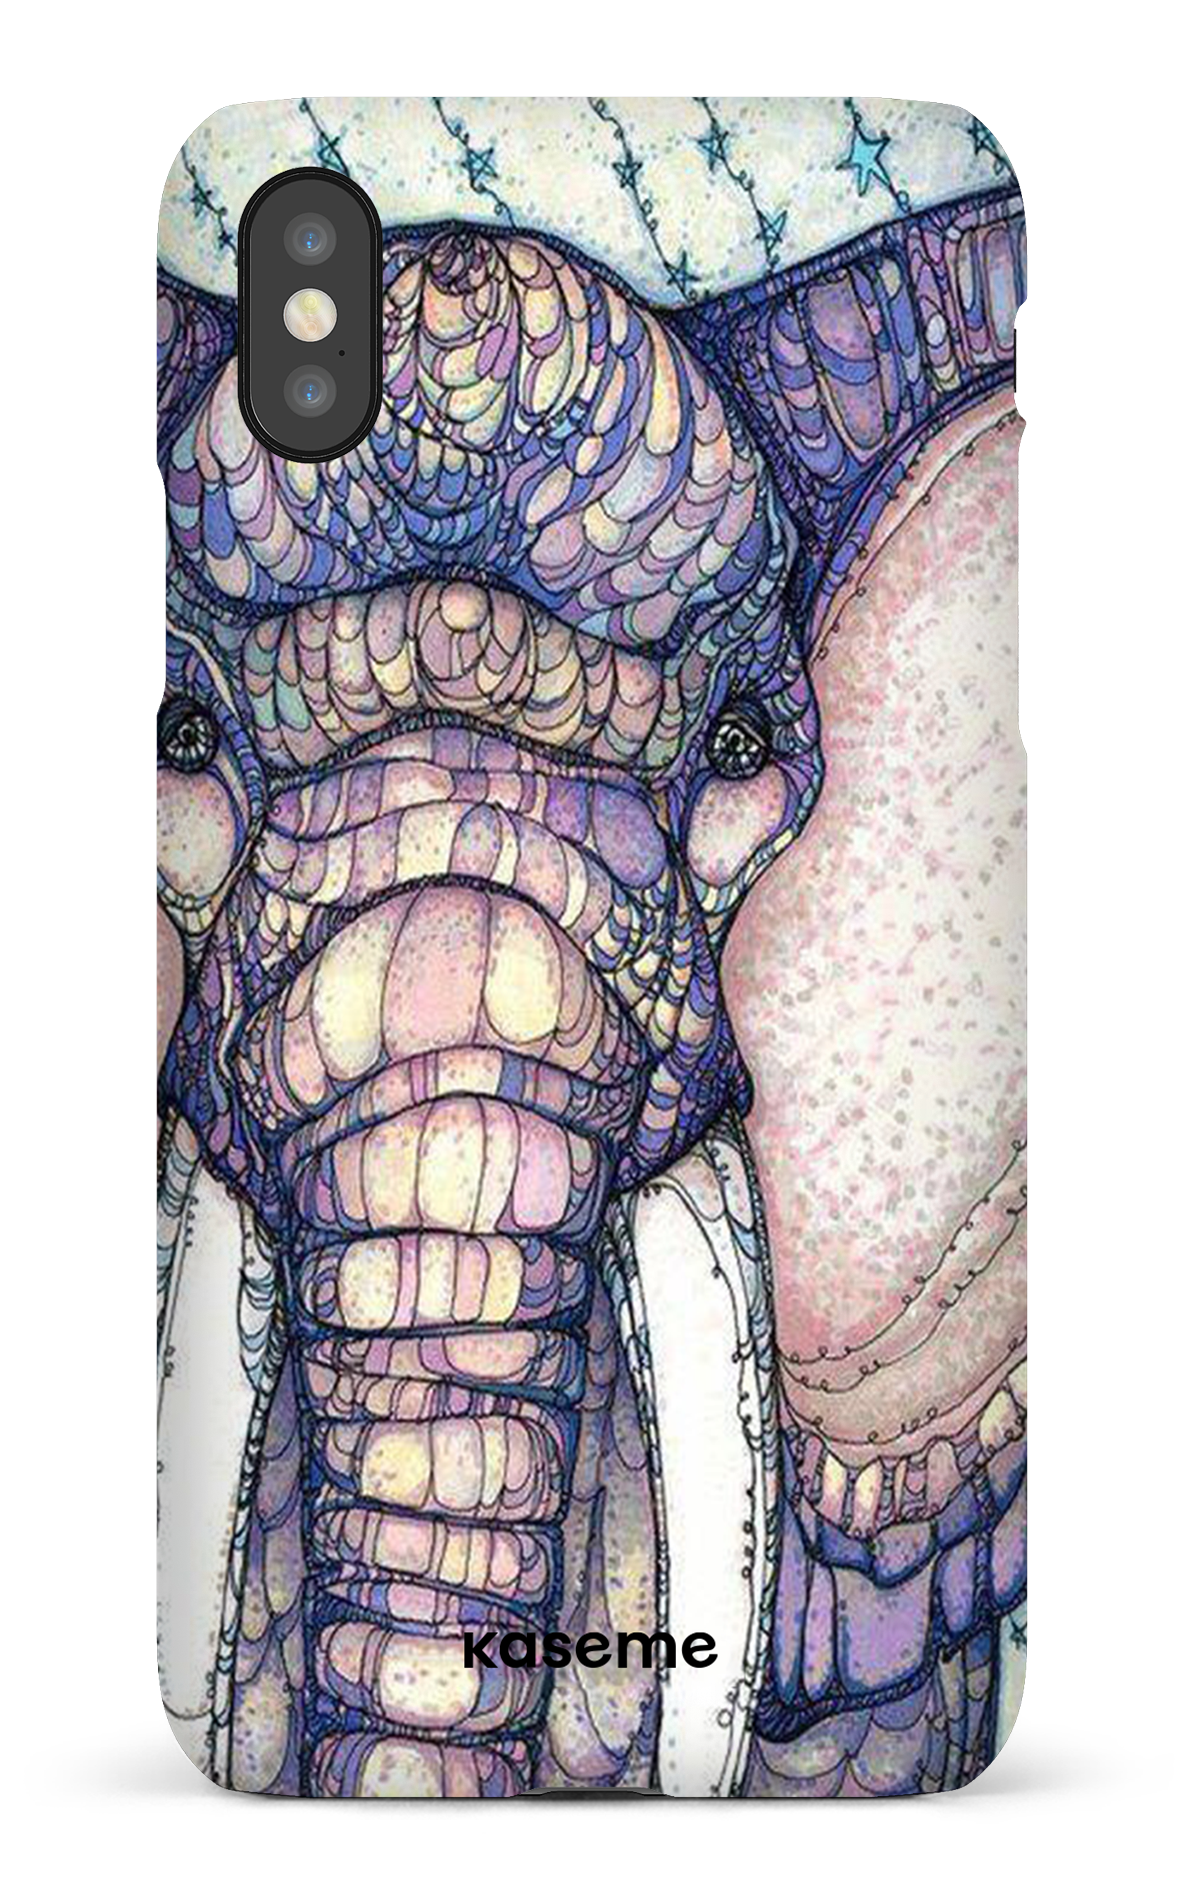 Mosaic Elephant - iPhone X/XS